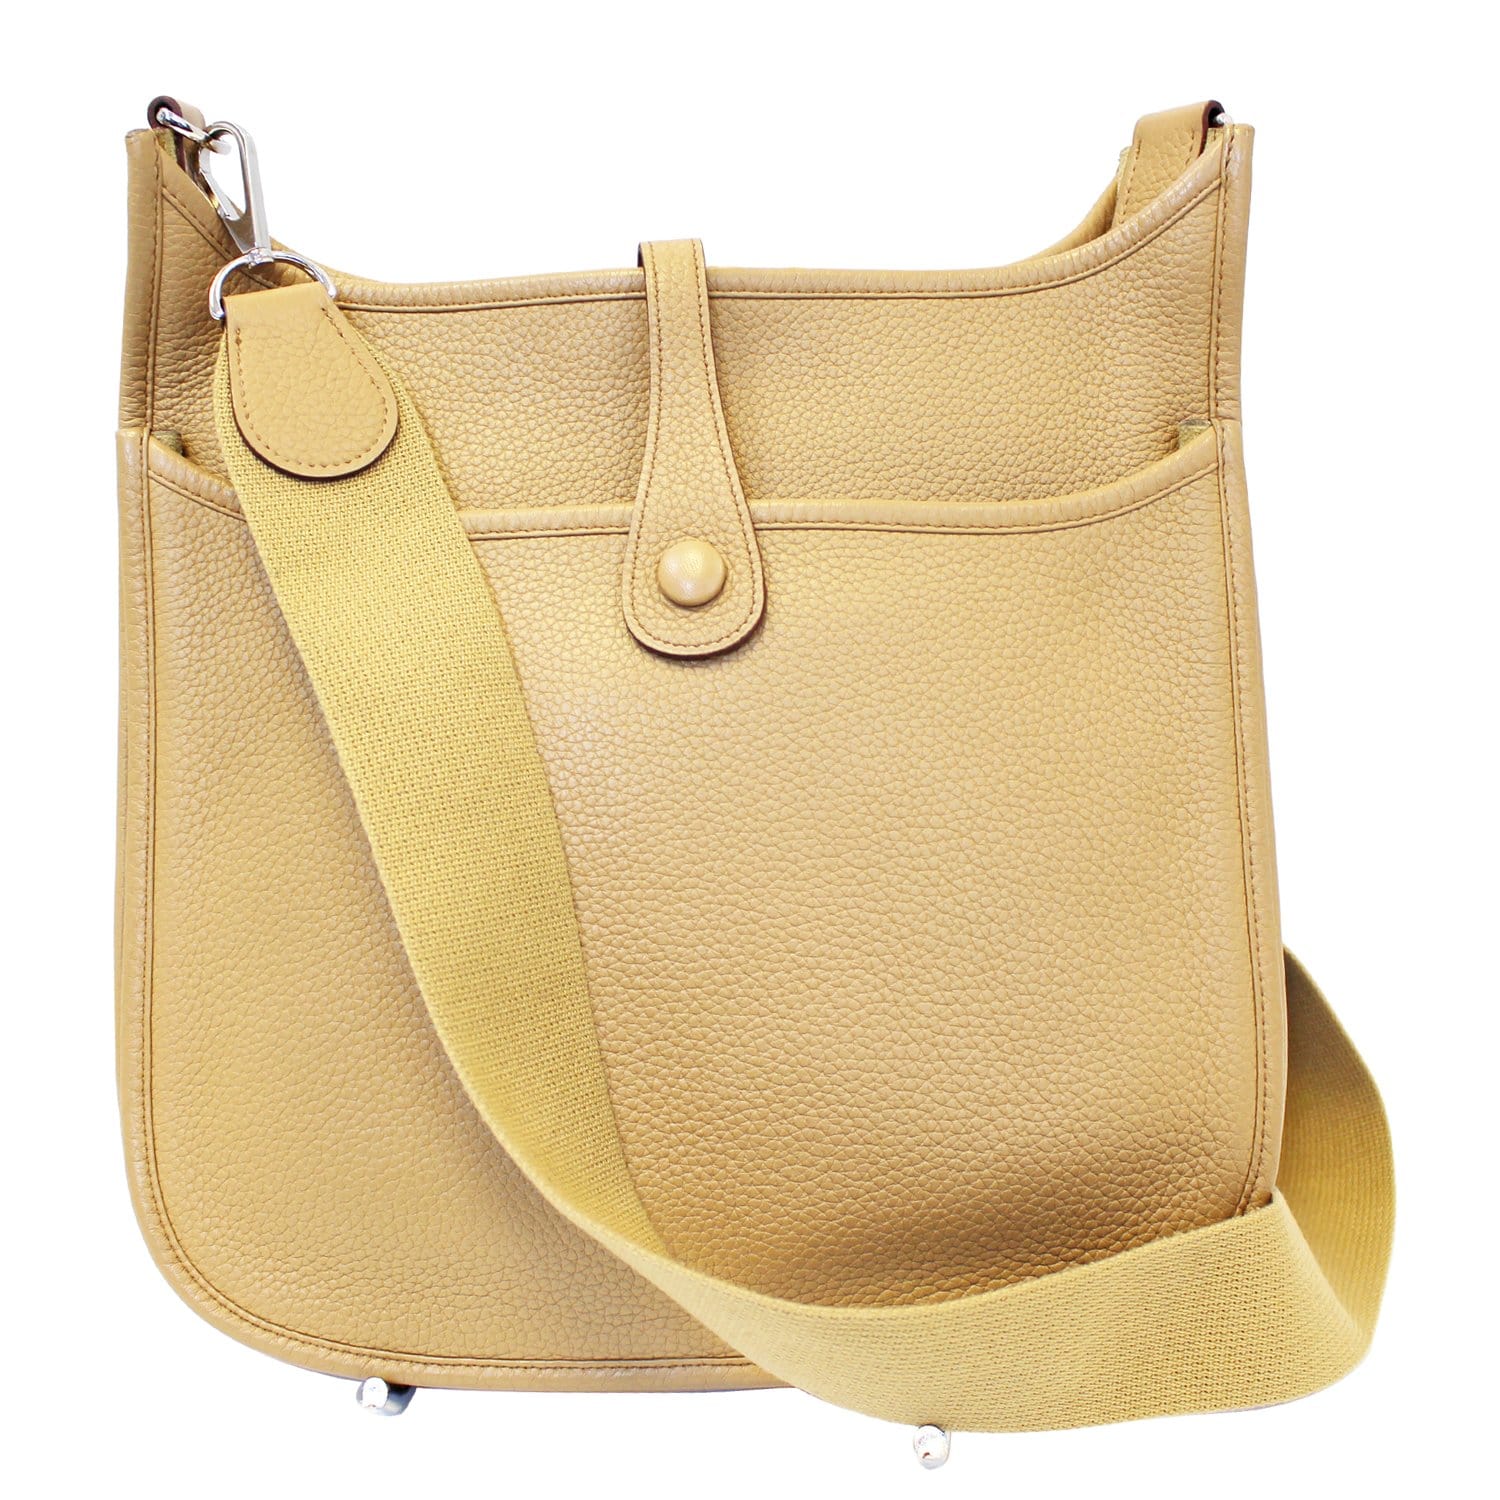 Hermès - Authenticated Evelyne Handbag - Cloth Beige for Women, Never Worn